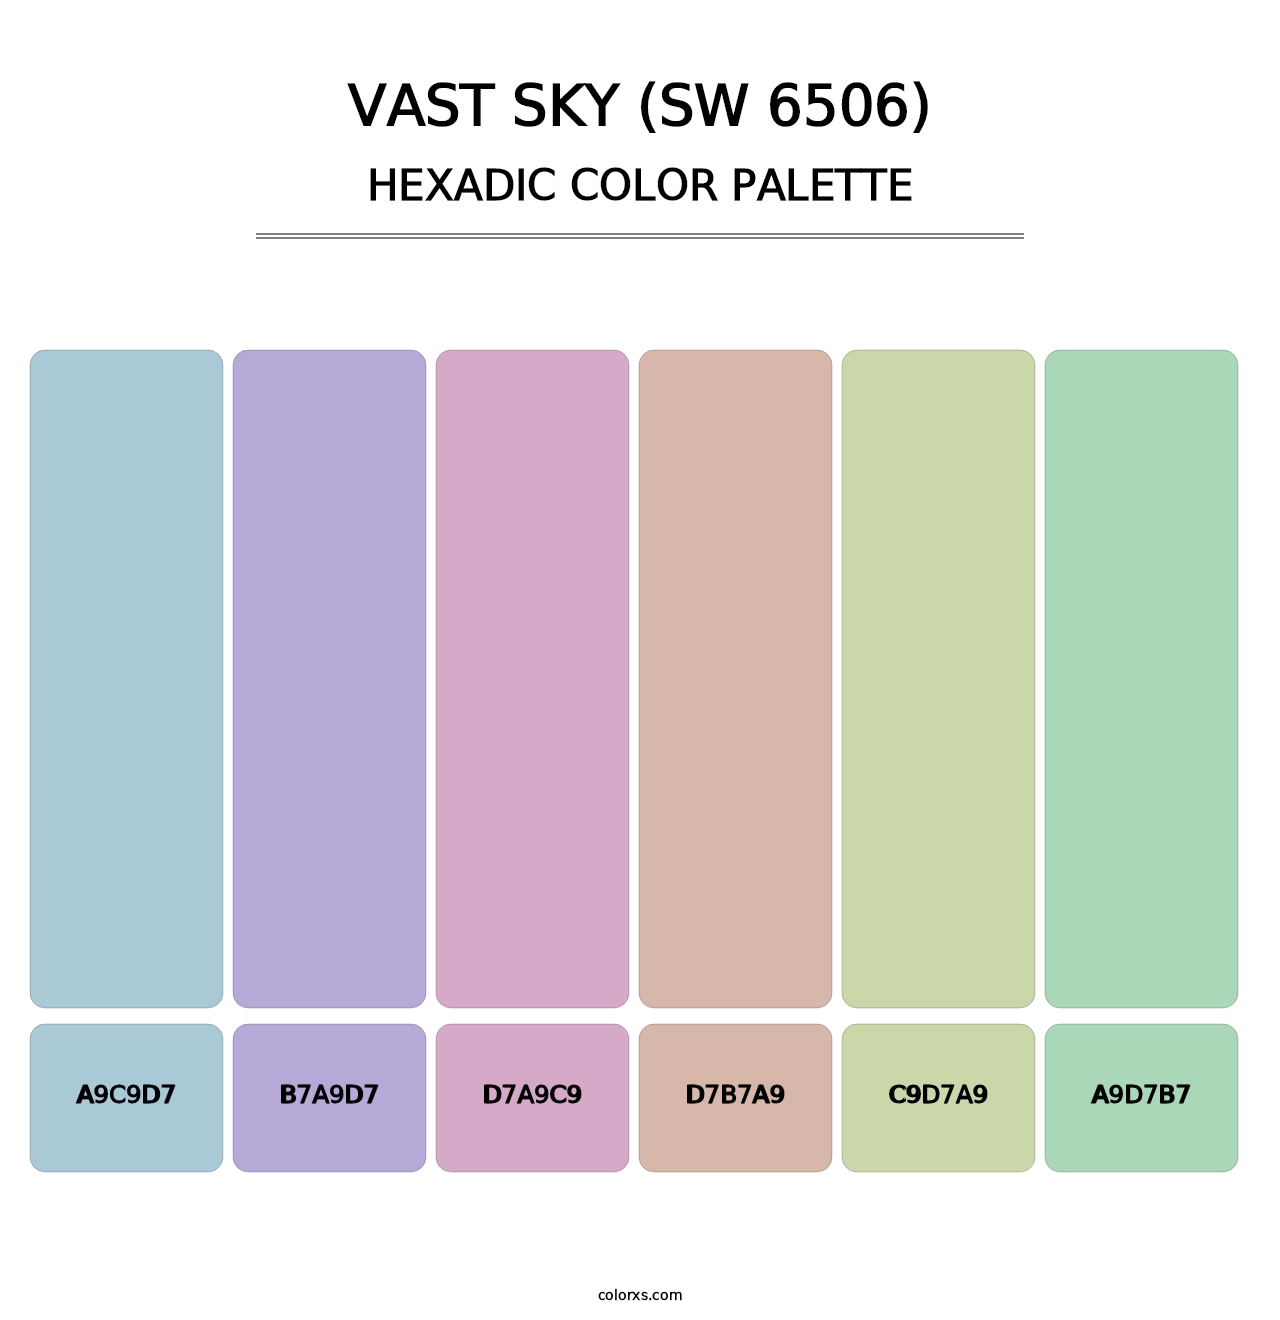 Vast Sky (SW 6506) - Hexadic Color Palette